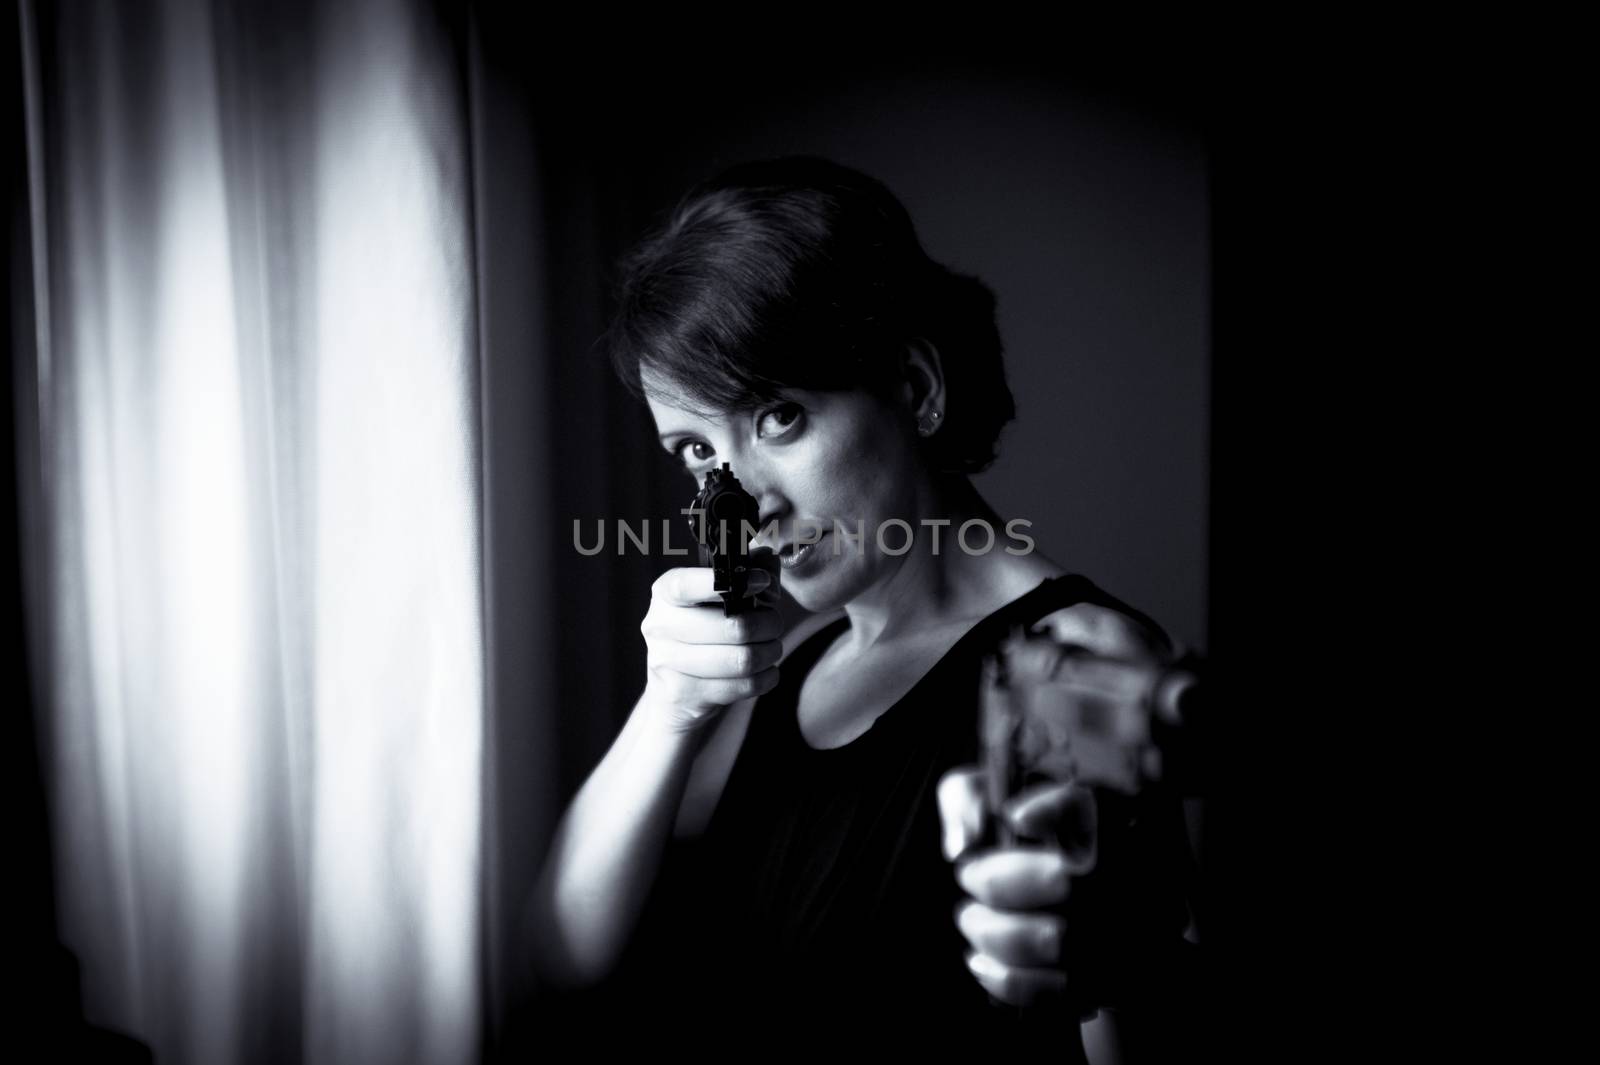 Portrait of woman with gun. Black dress